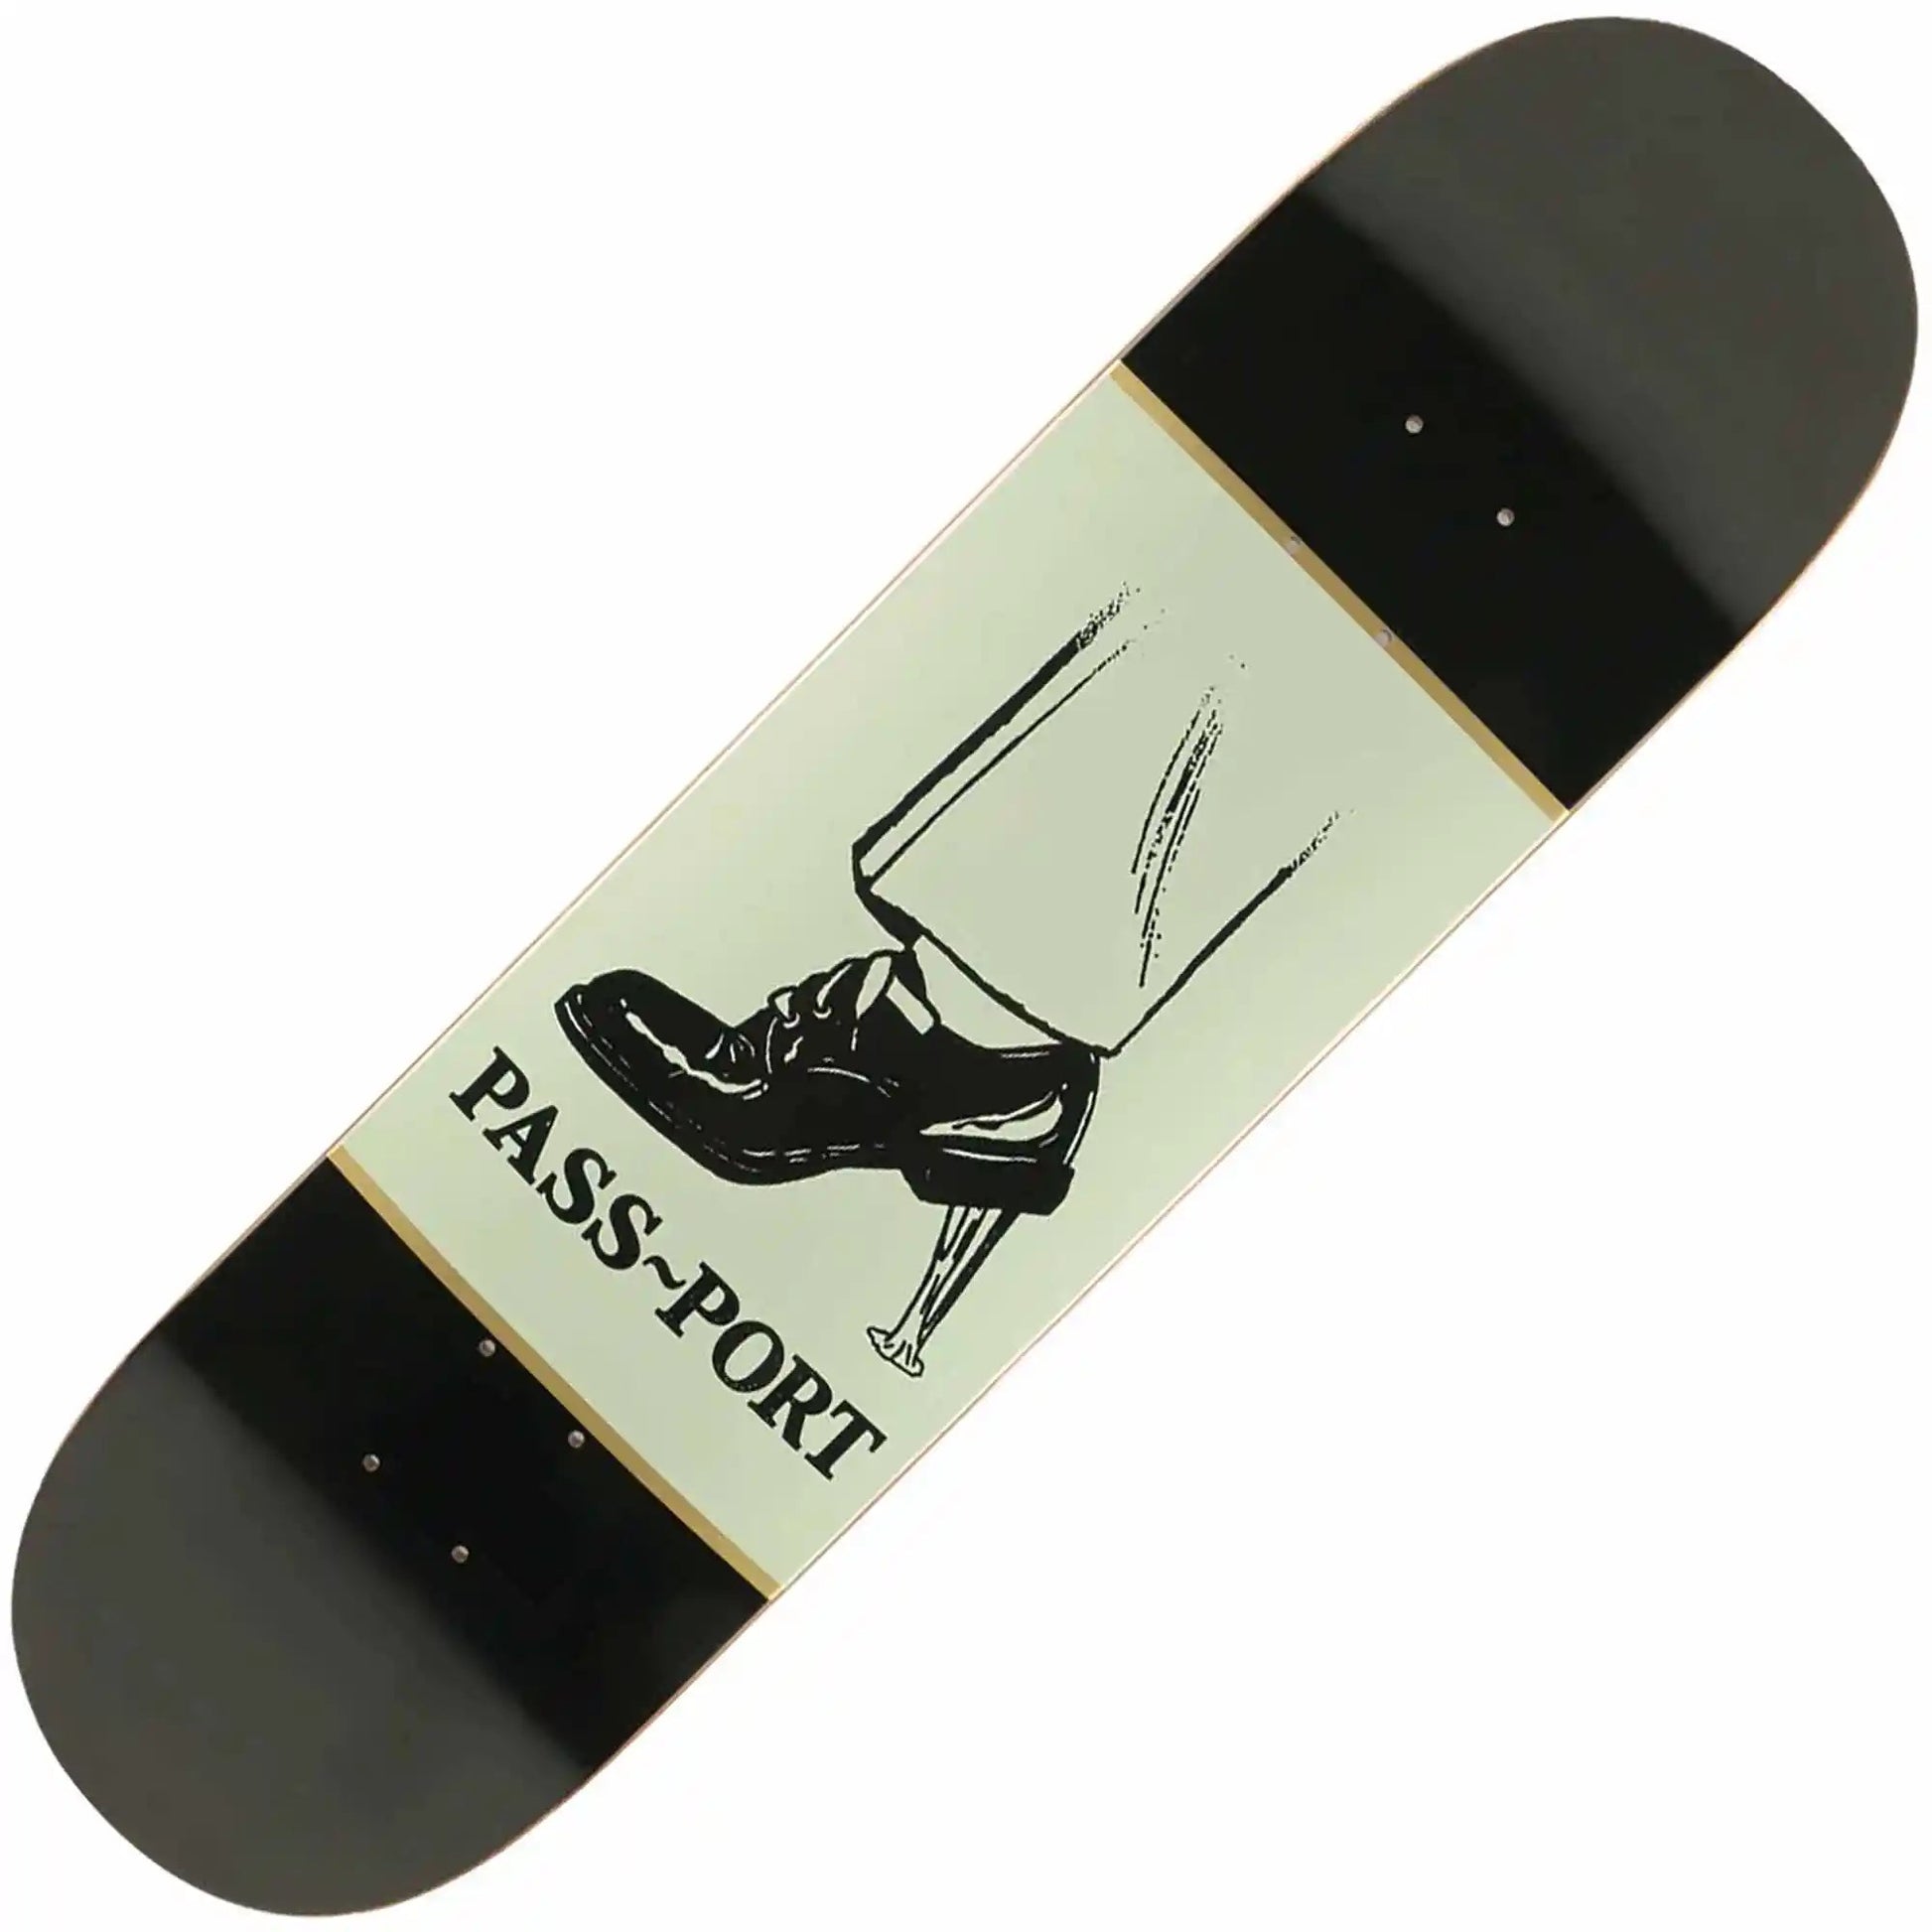 Passport Gumshoe Deck (8.25") - Tiki Room Skateboards - 1